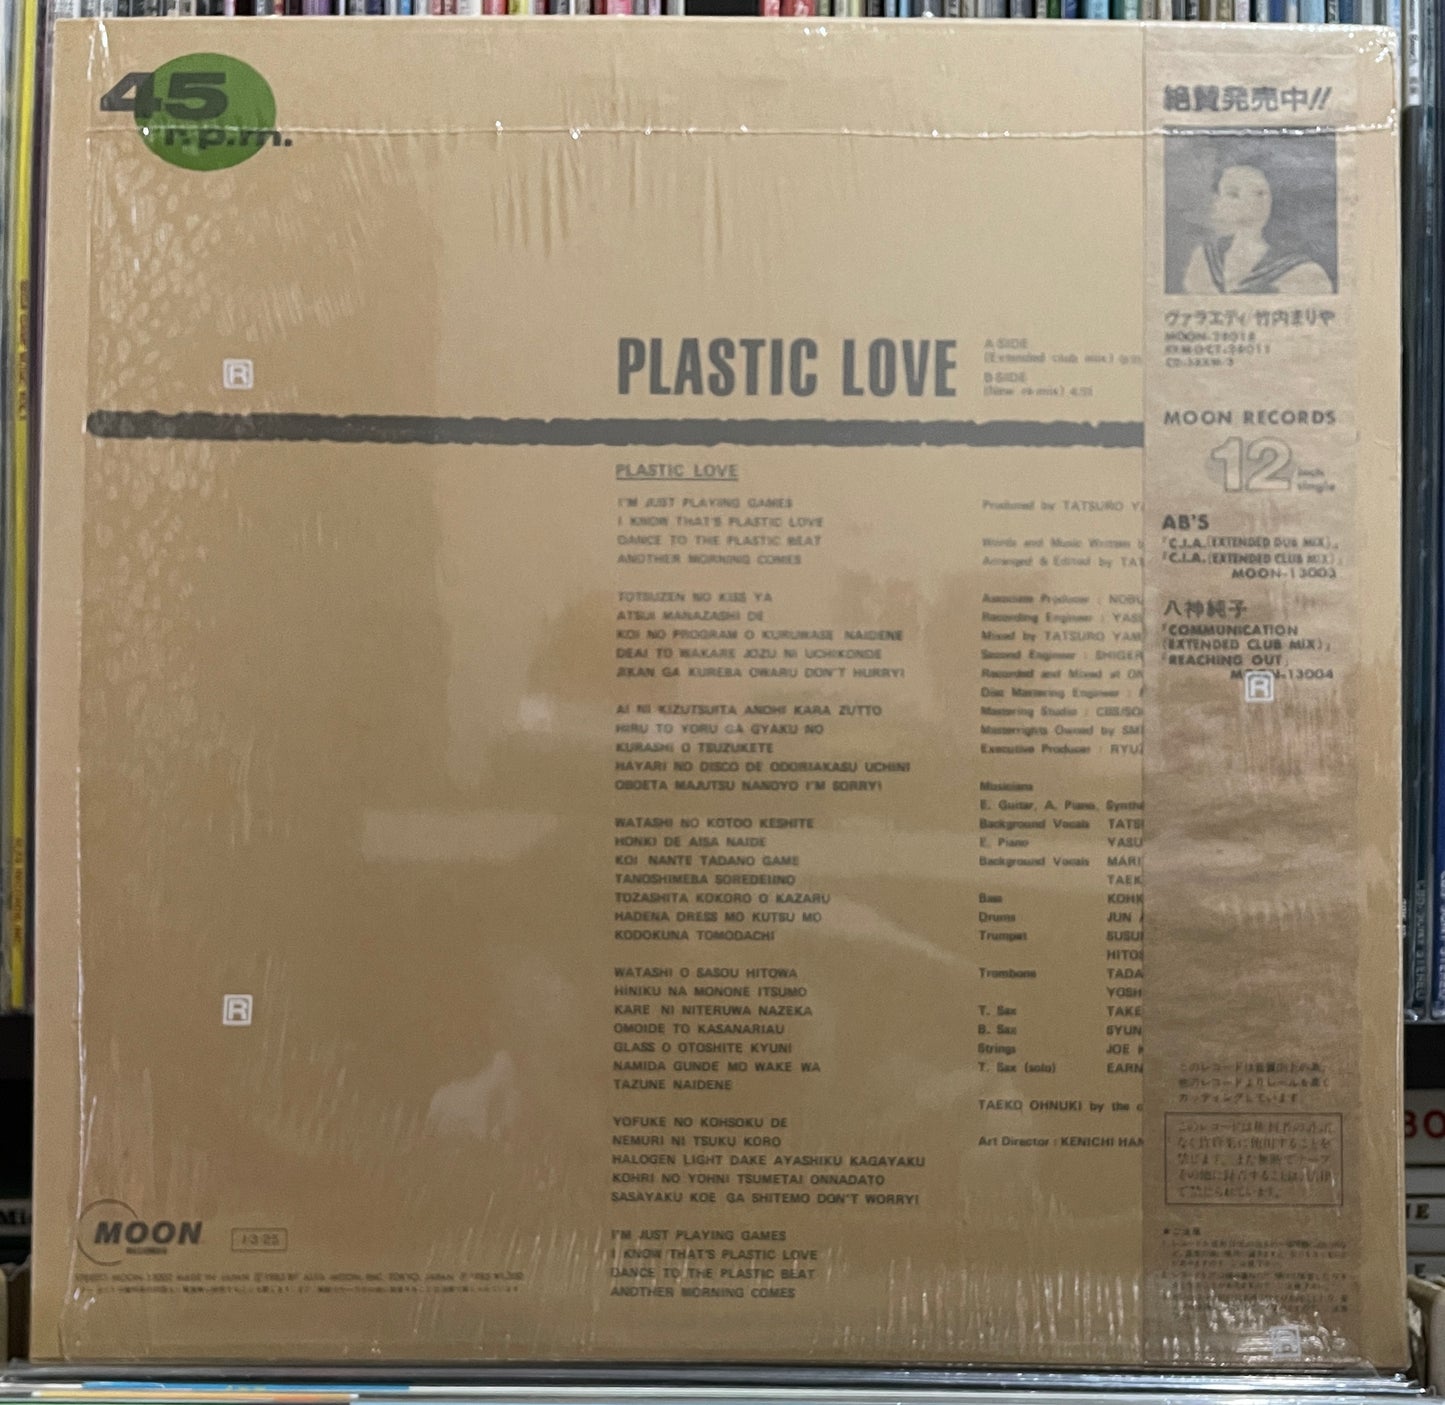 Mariya Takeuchi “Plastic Love” - Extended Club Mix 12” single (1985)